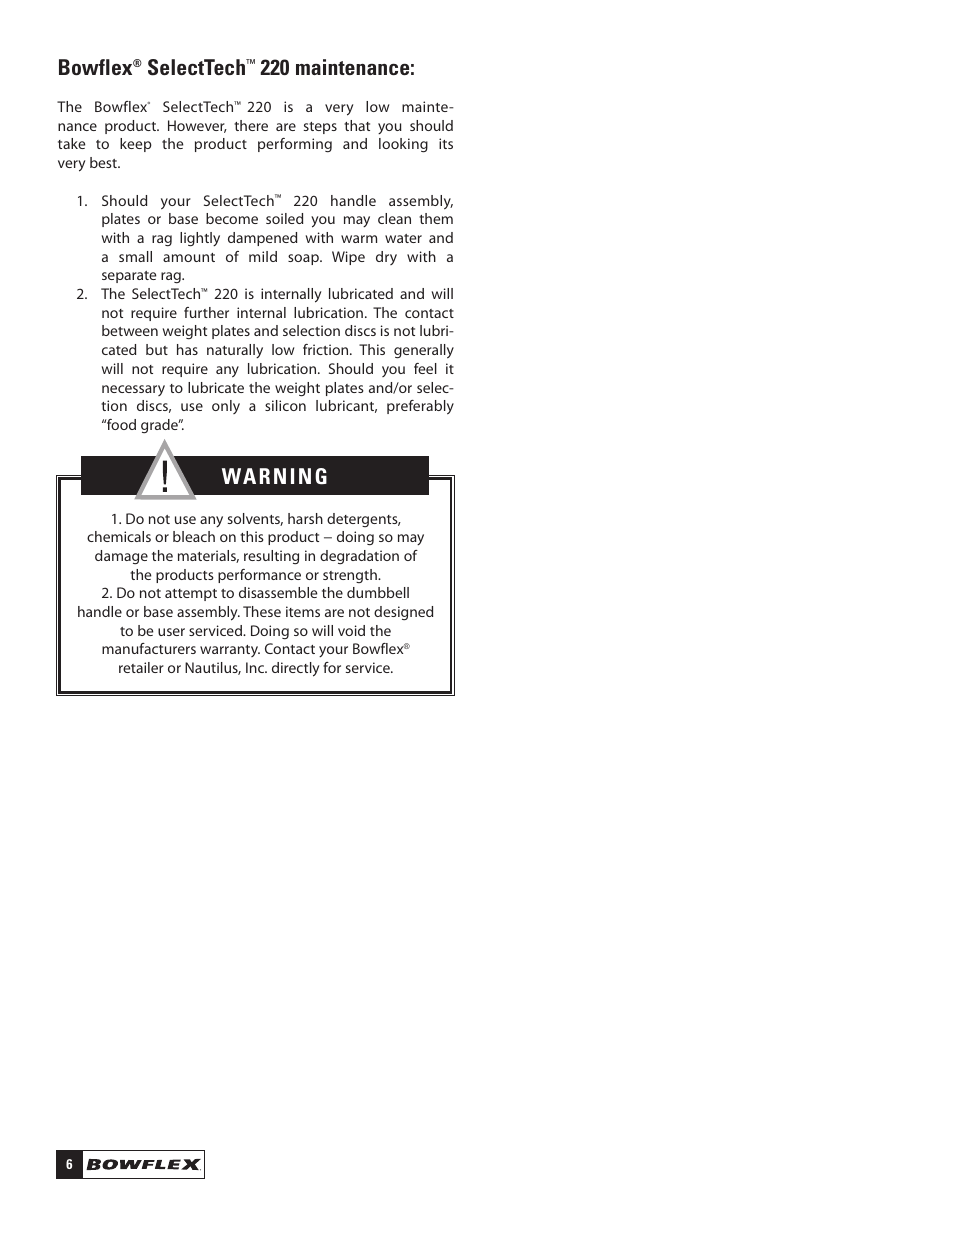 Bowflex, Selecttech, 220 maintenance | Bowflex SelectTech 220 Dumbells User Manual | Page 8 / 36